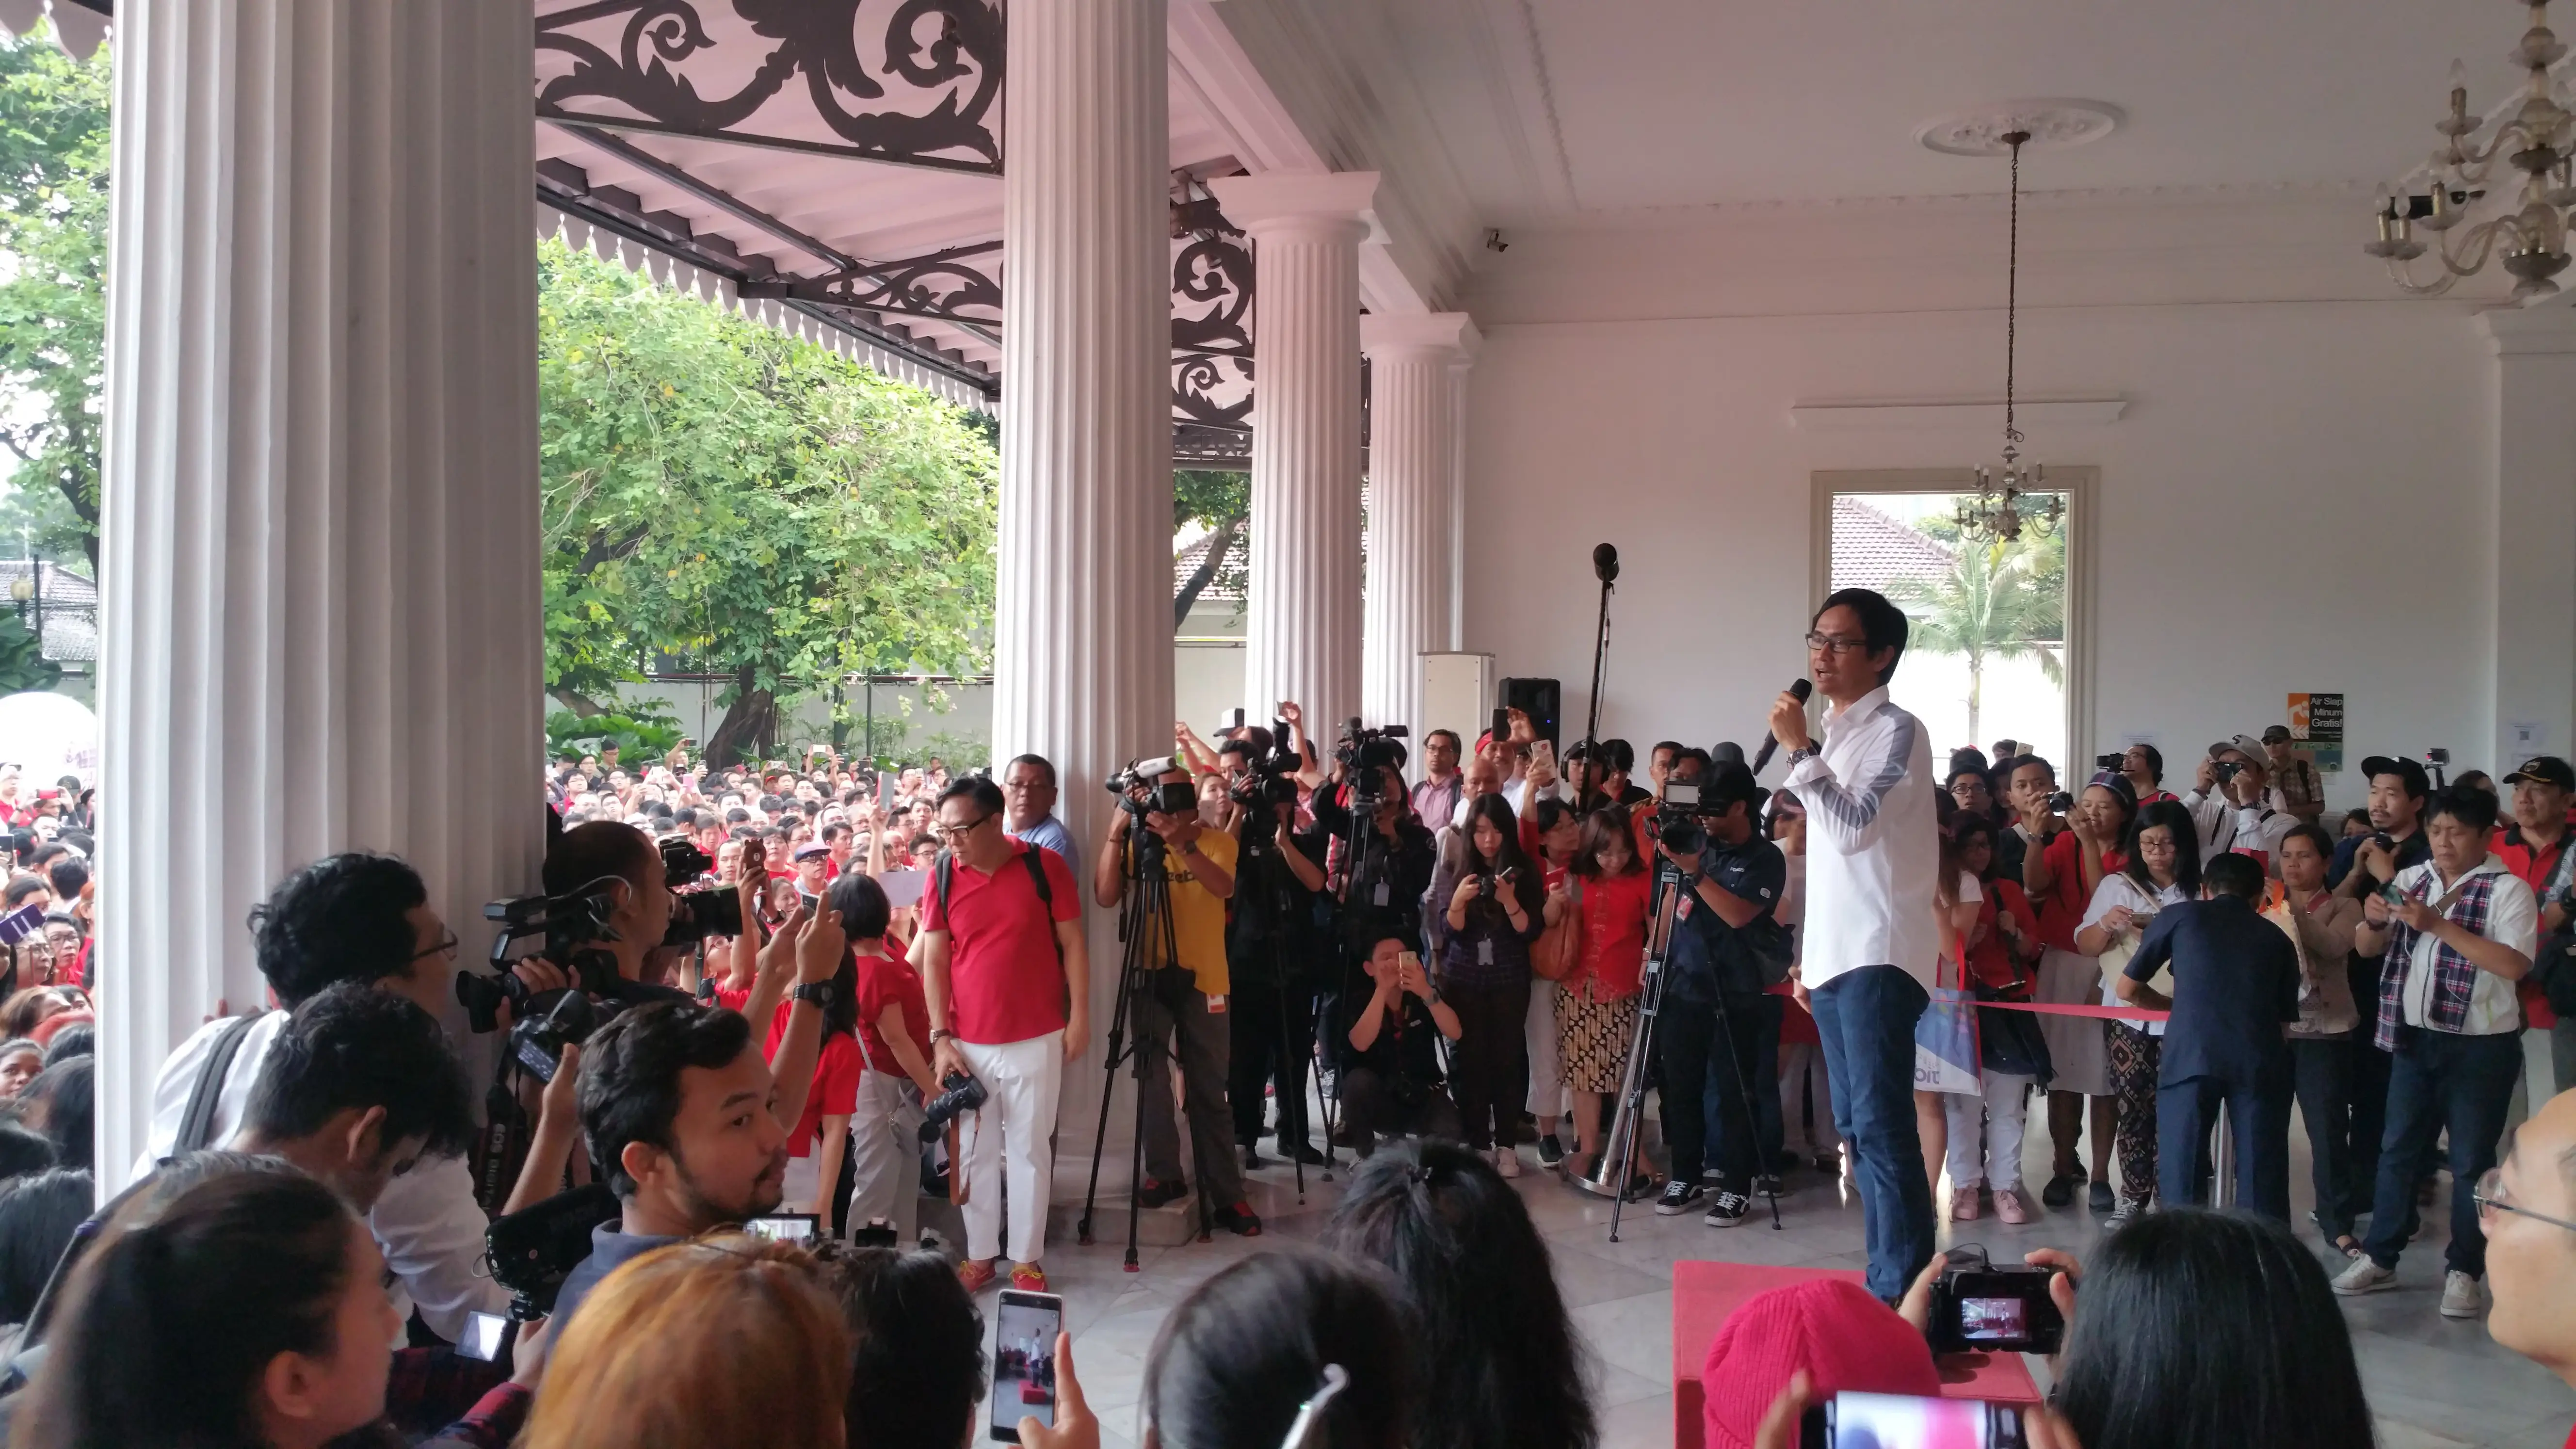 Musisi kondang Adi MS menjadi pemandu alunan lagu para pendukung Ahok di Balai Kota. (Liputan6.com/Nanda Perdana Putra)